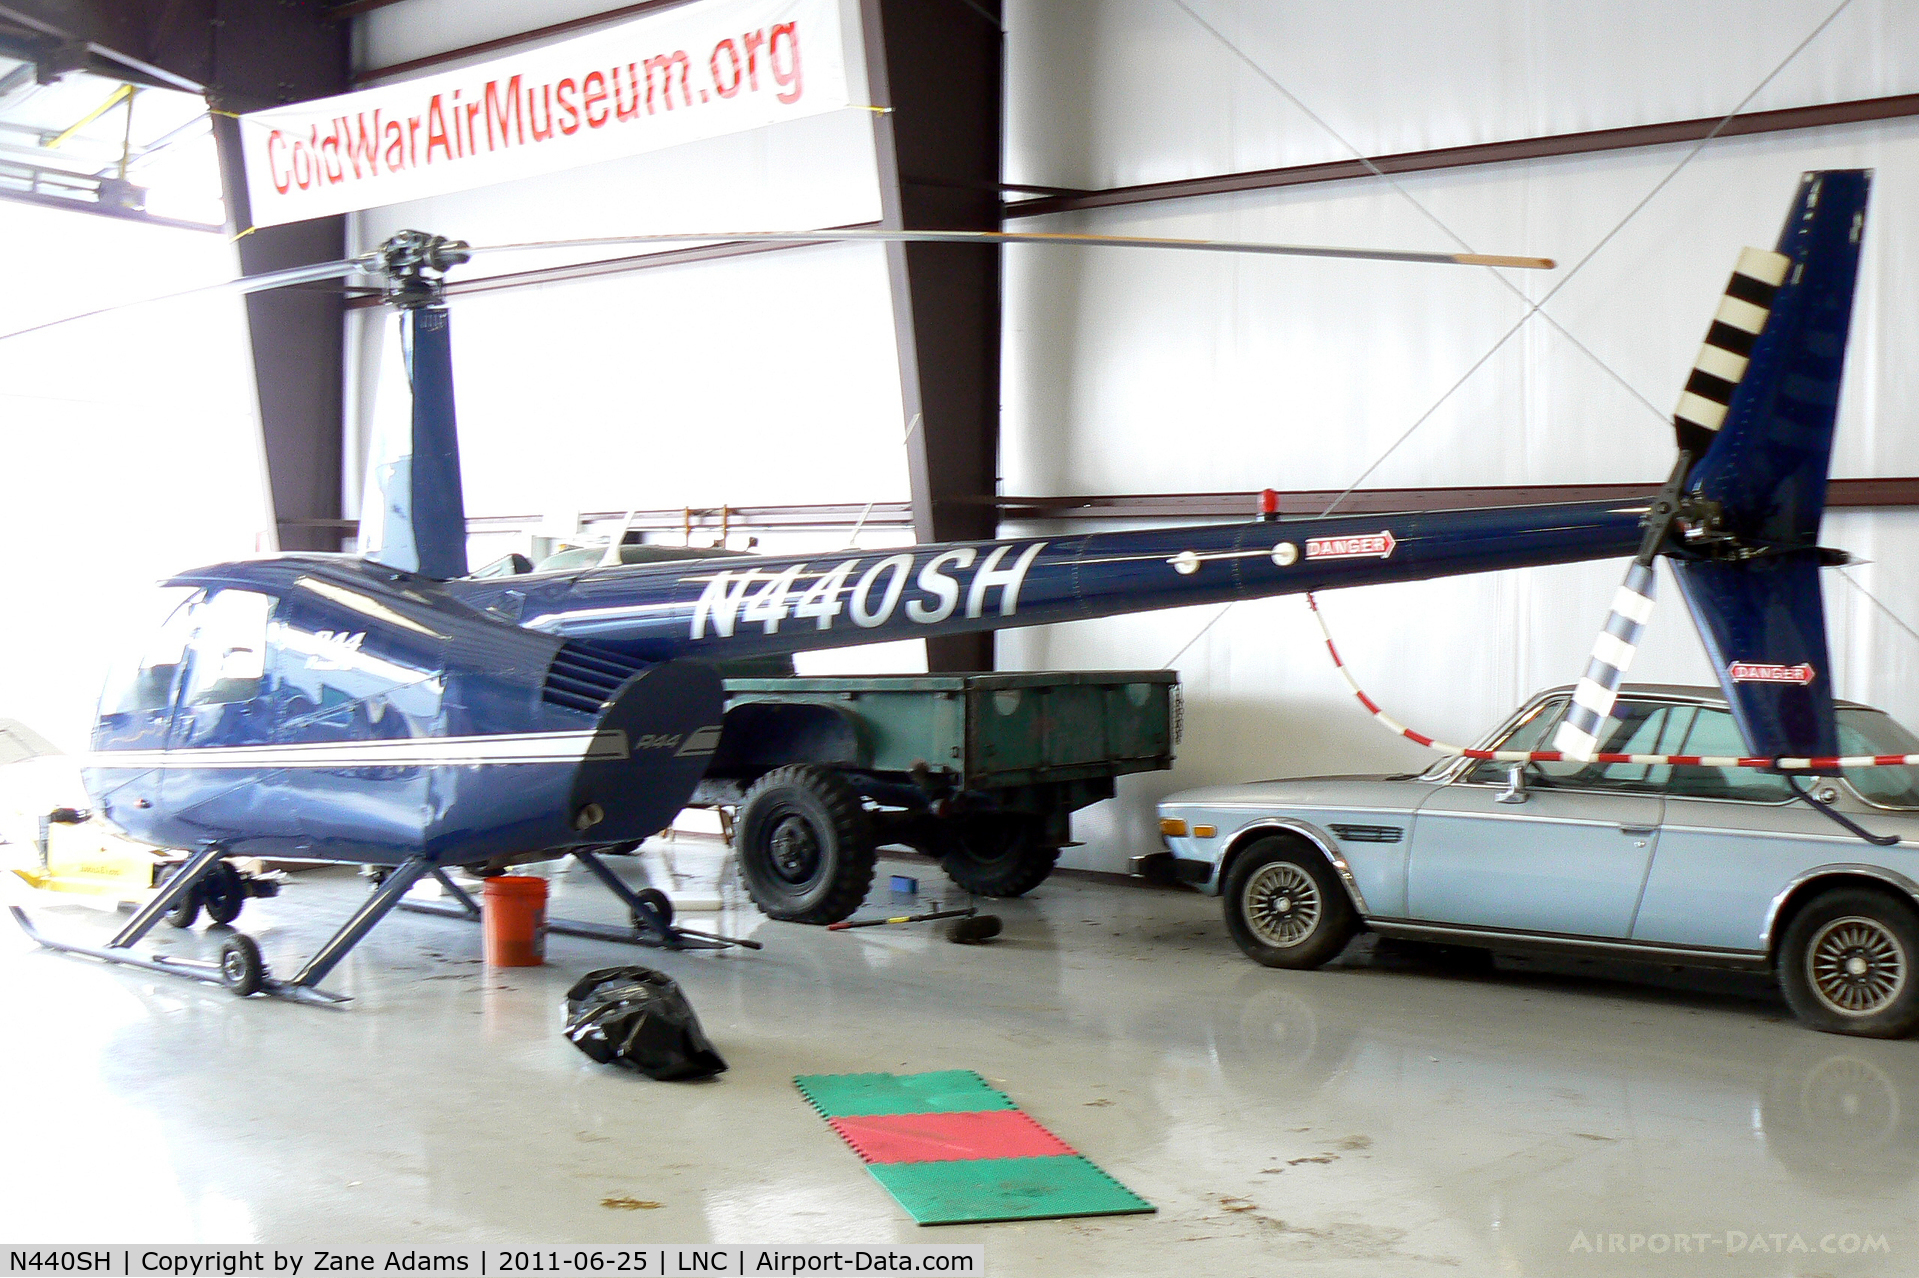 N440SH, 2005 Robinson R44 II C/N 10784, In the Cold War Air Museum hanger at Lancaster Municipal Airport